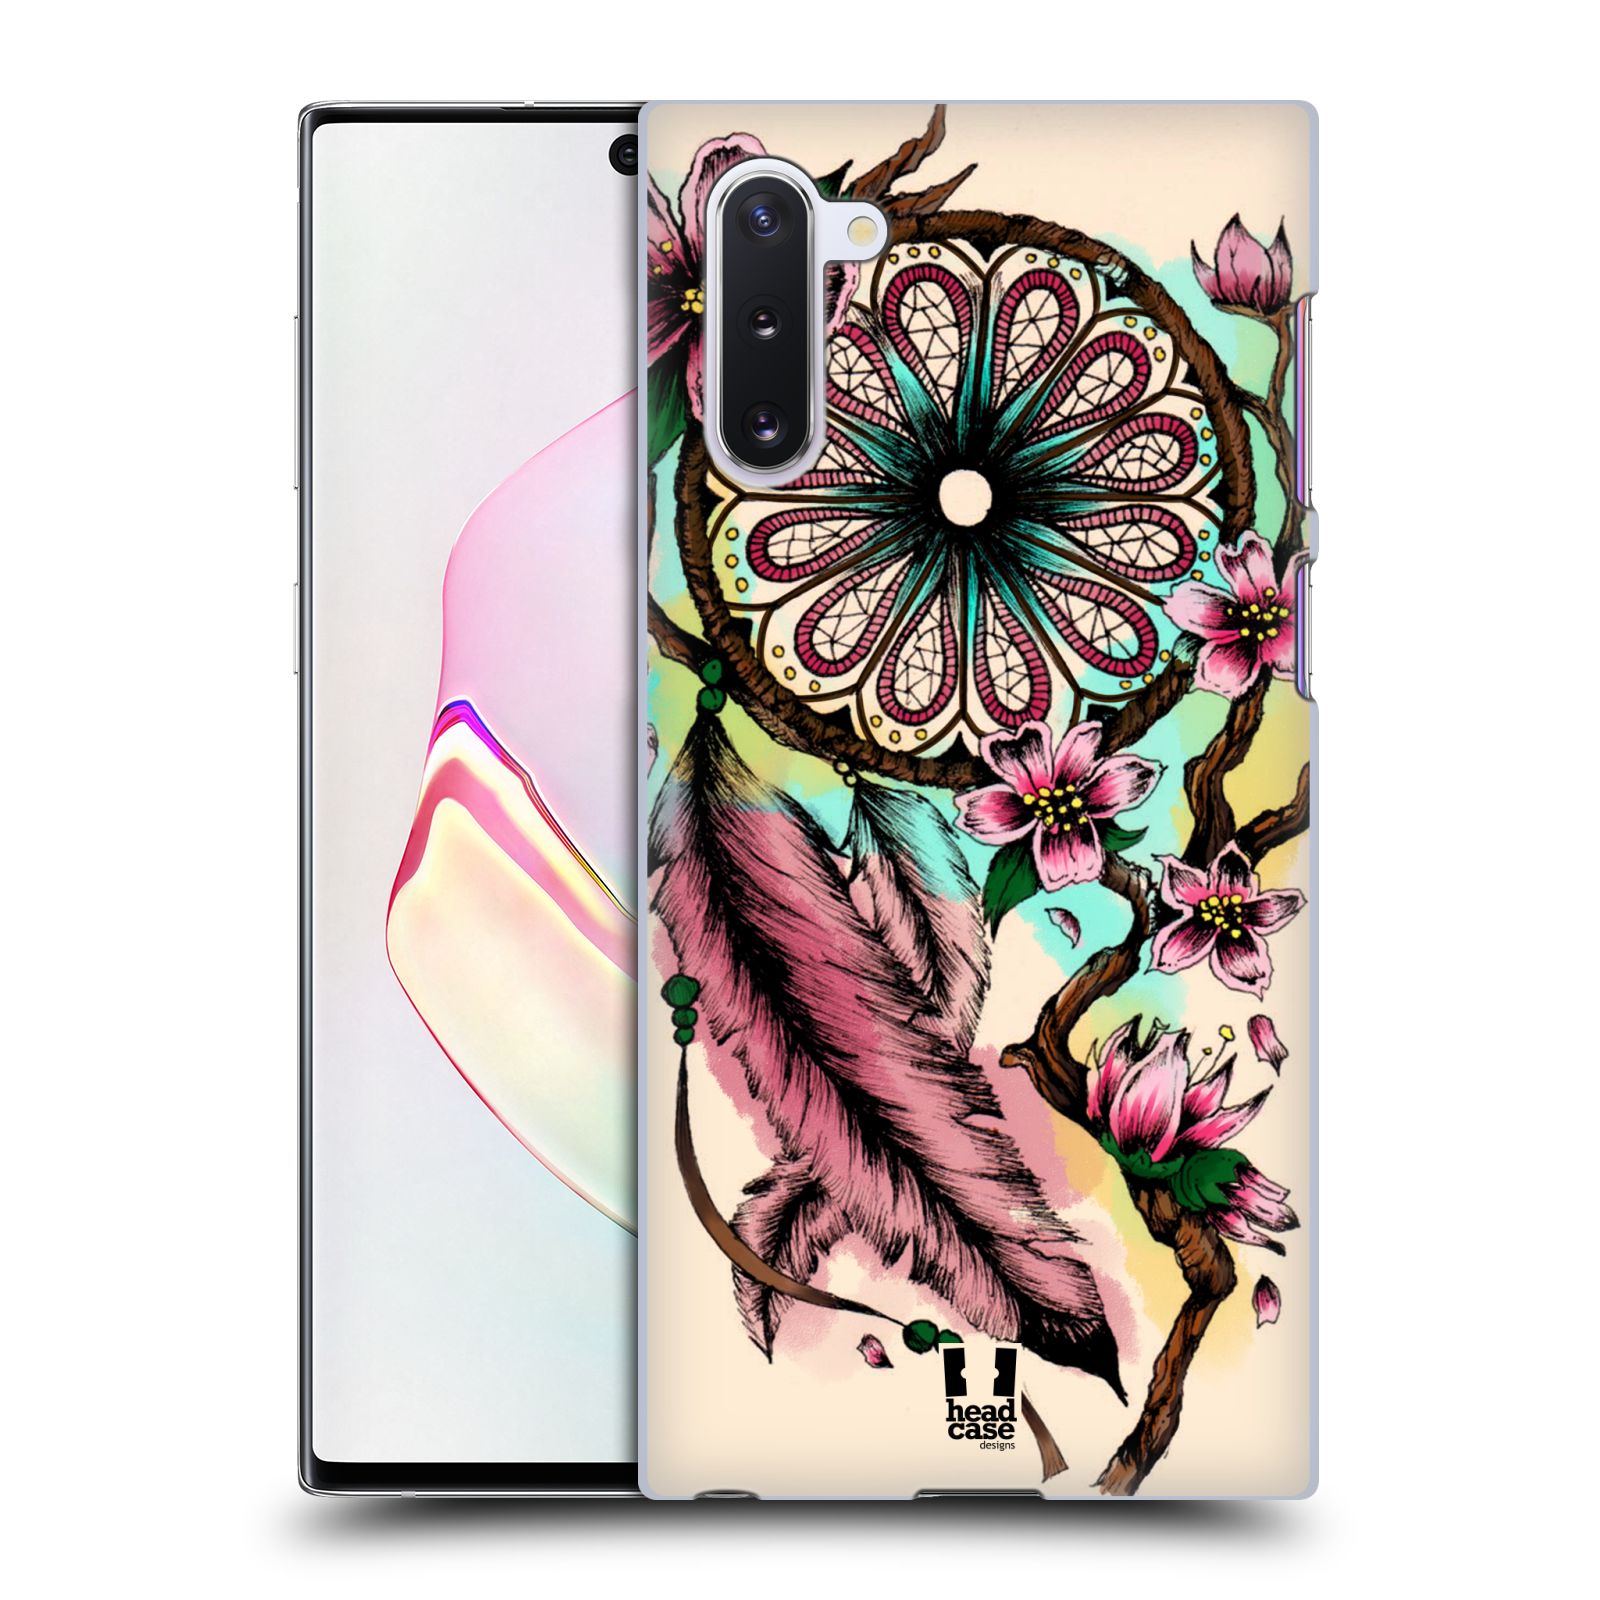 Pouzdro na mobil Samsung Galaxy Note 10 - HEAD CASE - vzor Květy lapač snů růžová